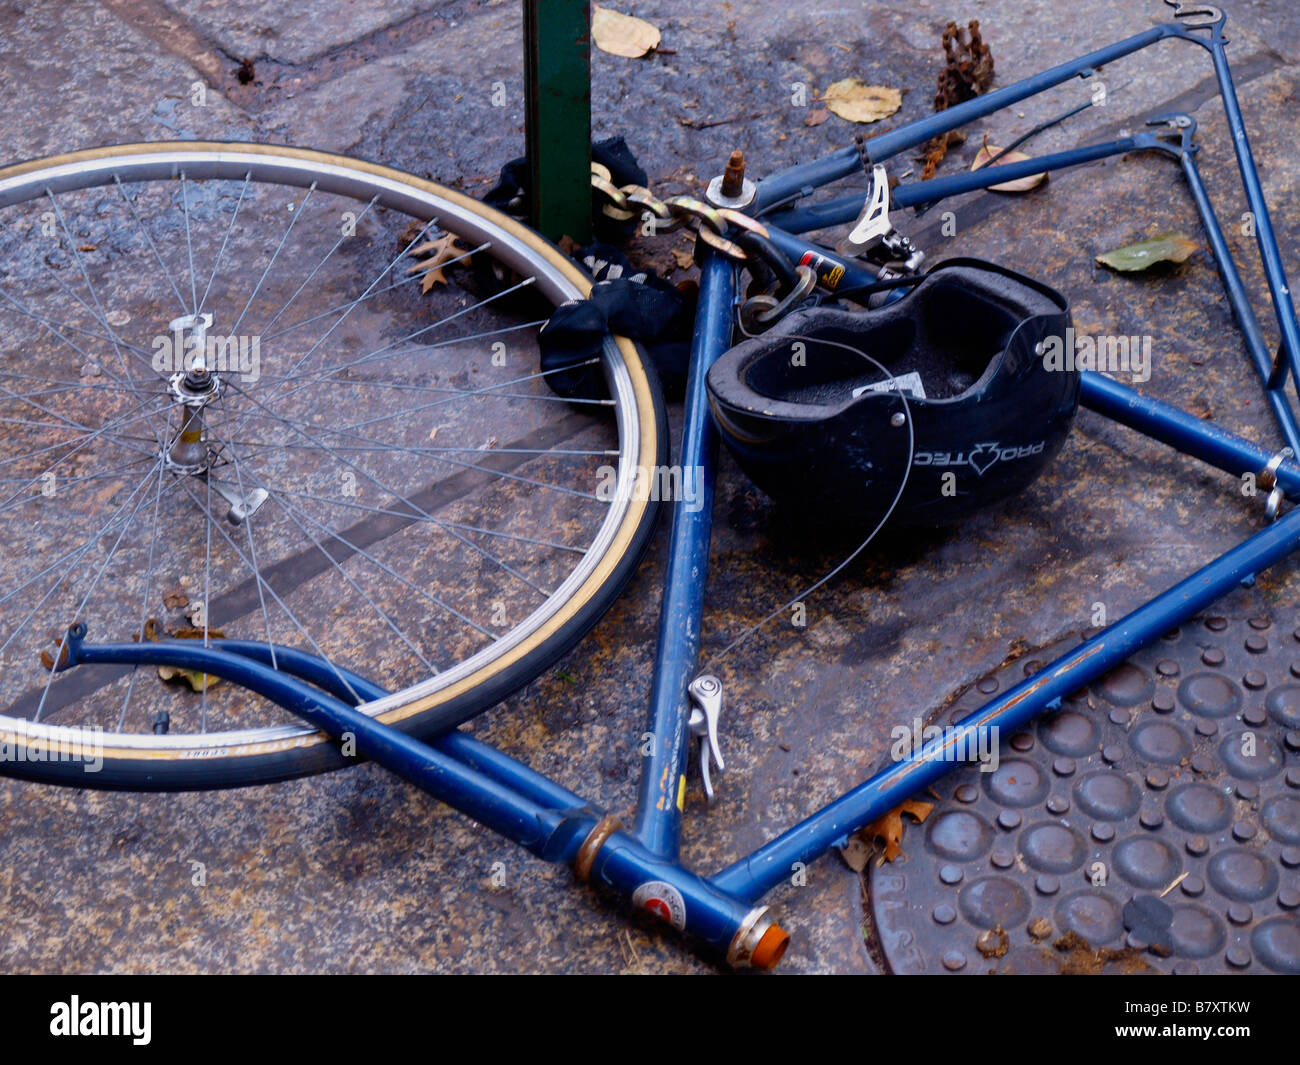 Bicicleta despojada fotografías e imágenes de alta resolución - Alamy